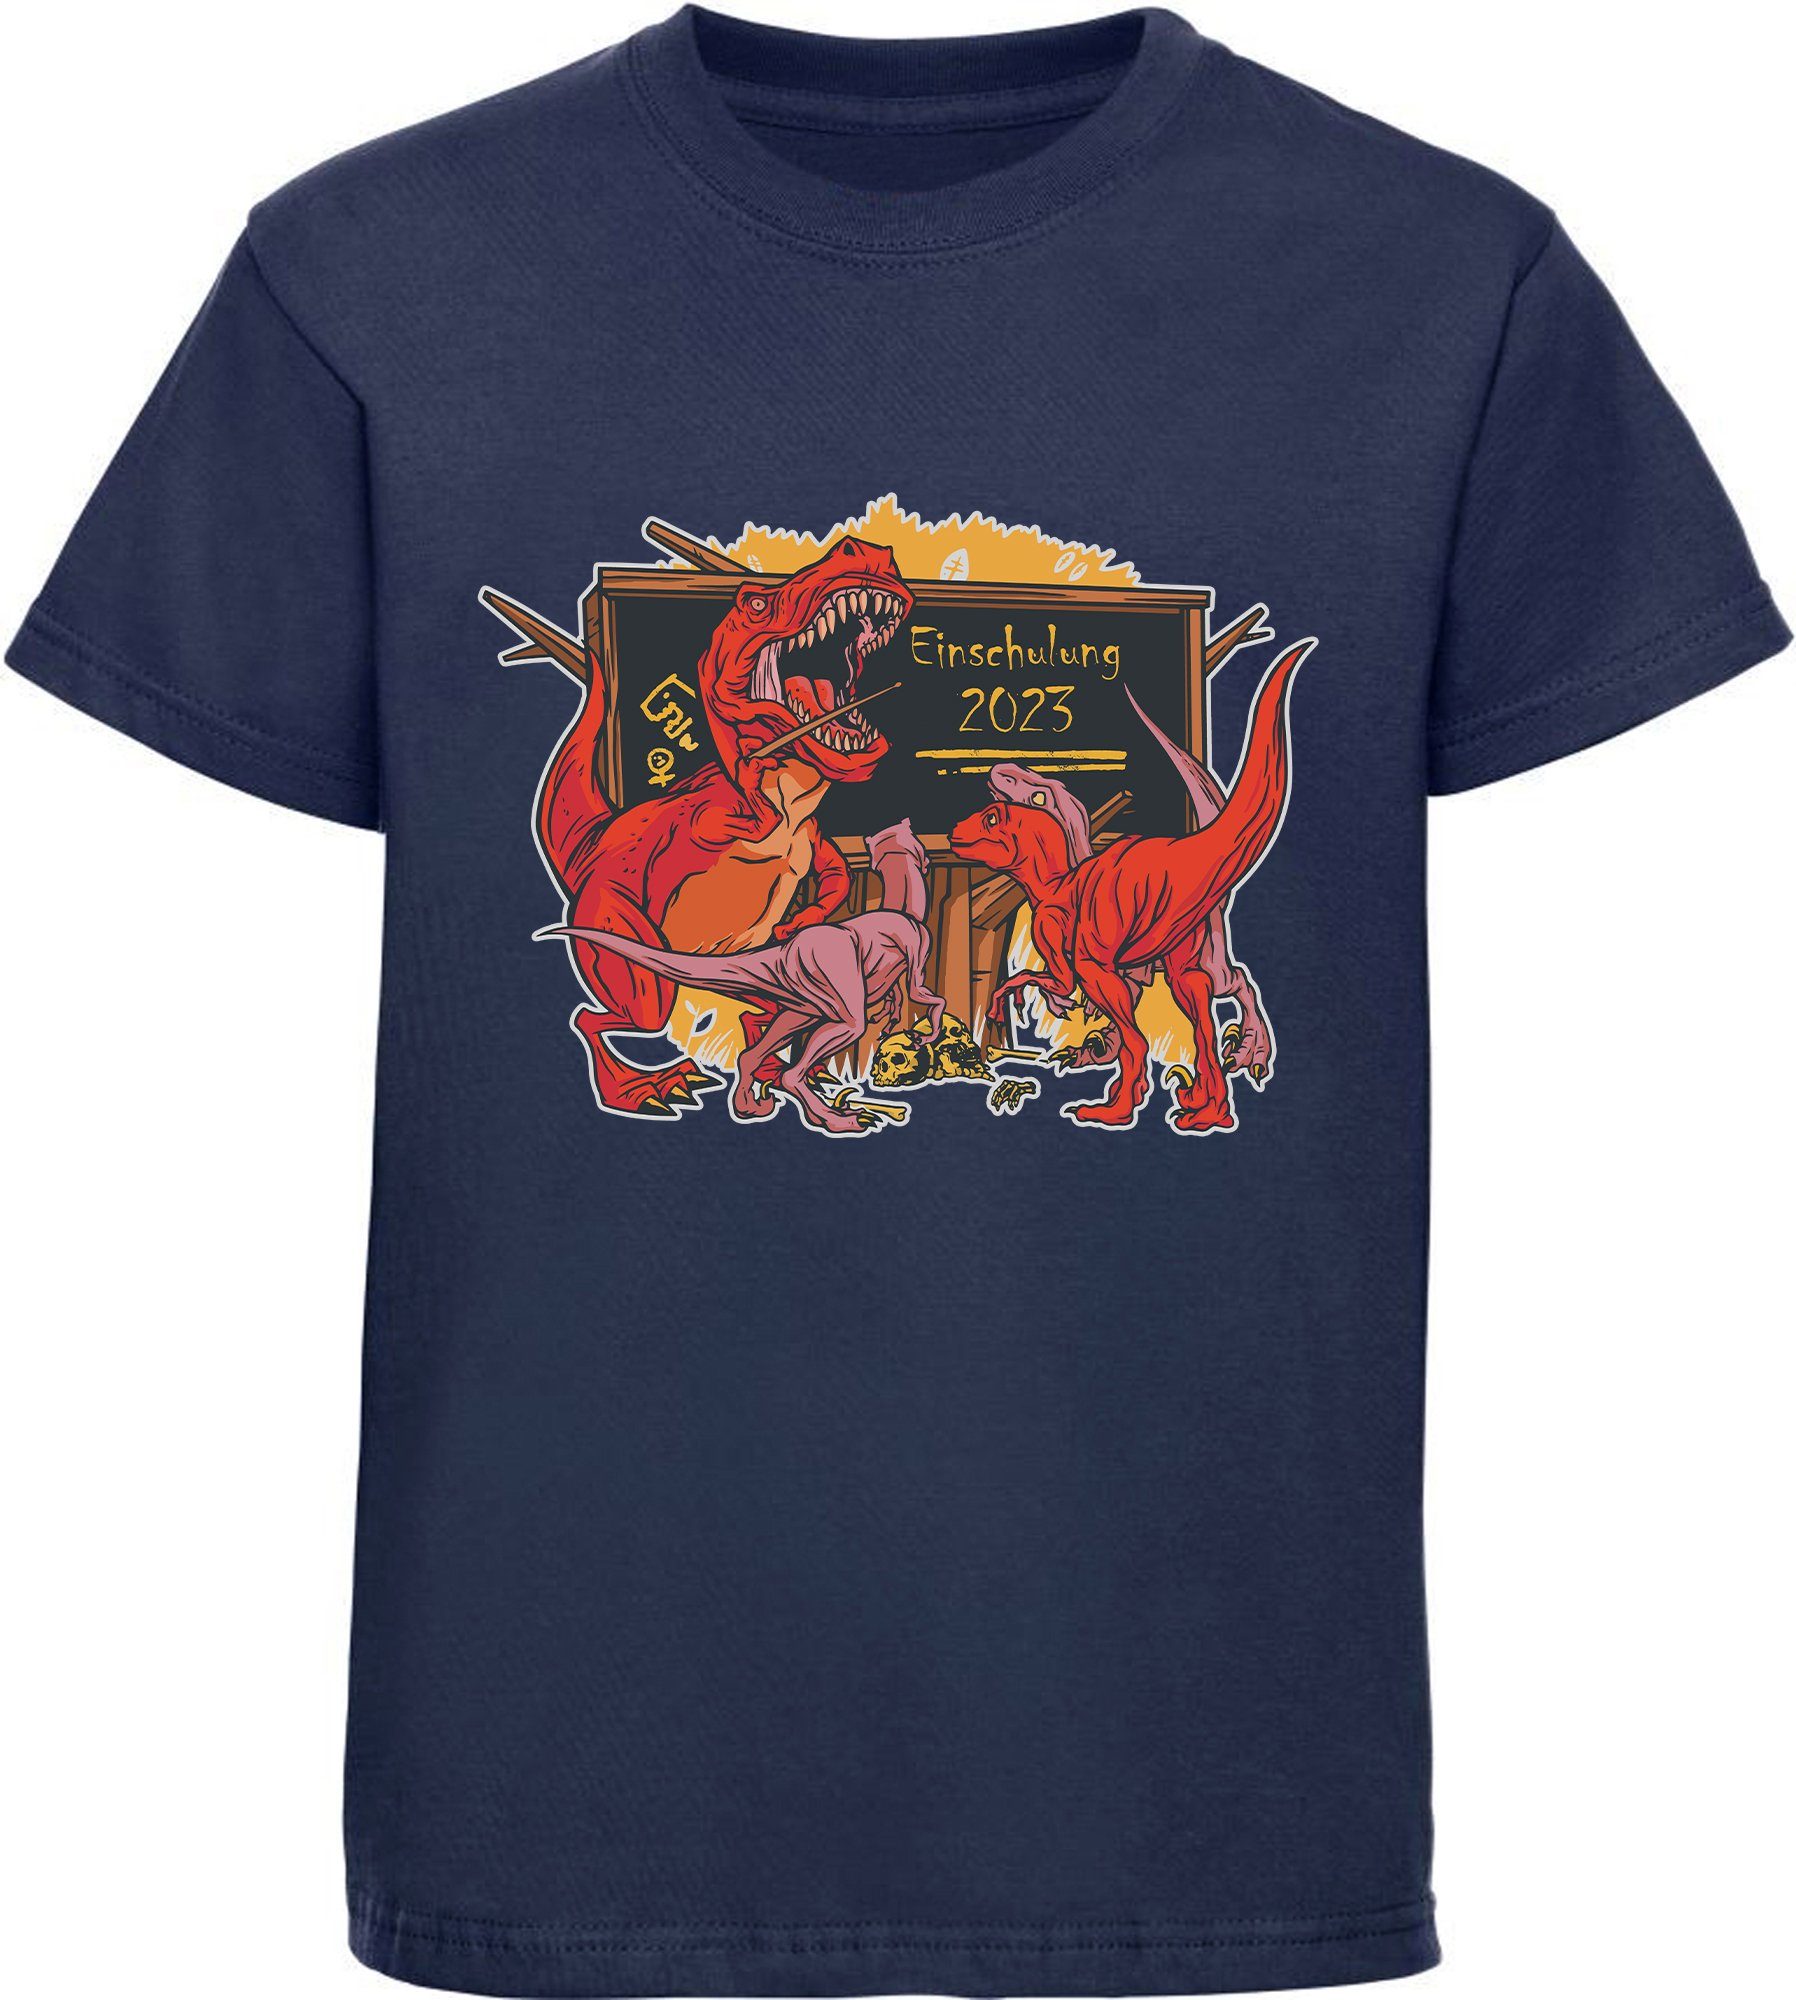 MyDesign24 Print-Shirt bedrucktes Kinder T-Shirt brüllender T-Rex als Lehrer Baumwollshirt Einschulung 2023, schwarz, weiß, rot, blau, i38 navy blau